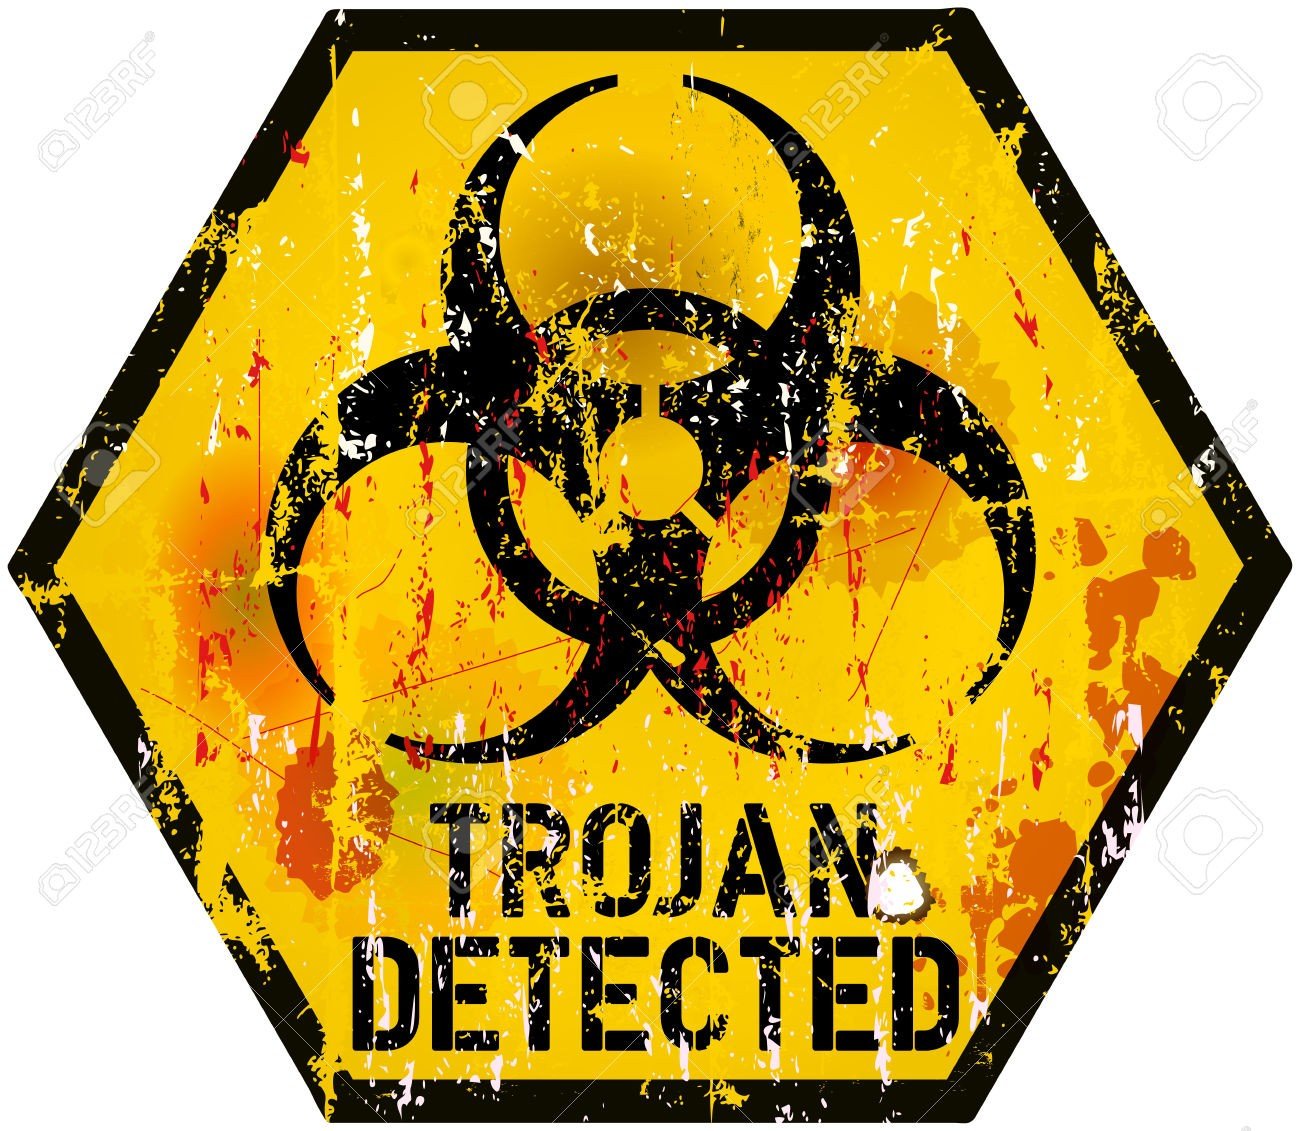 trojan / computer virus alert sign, vector illustration
